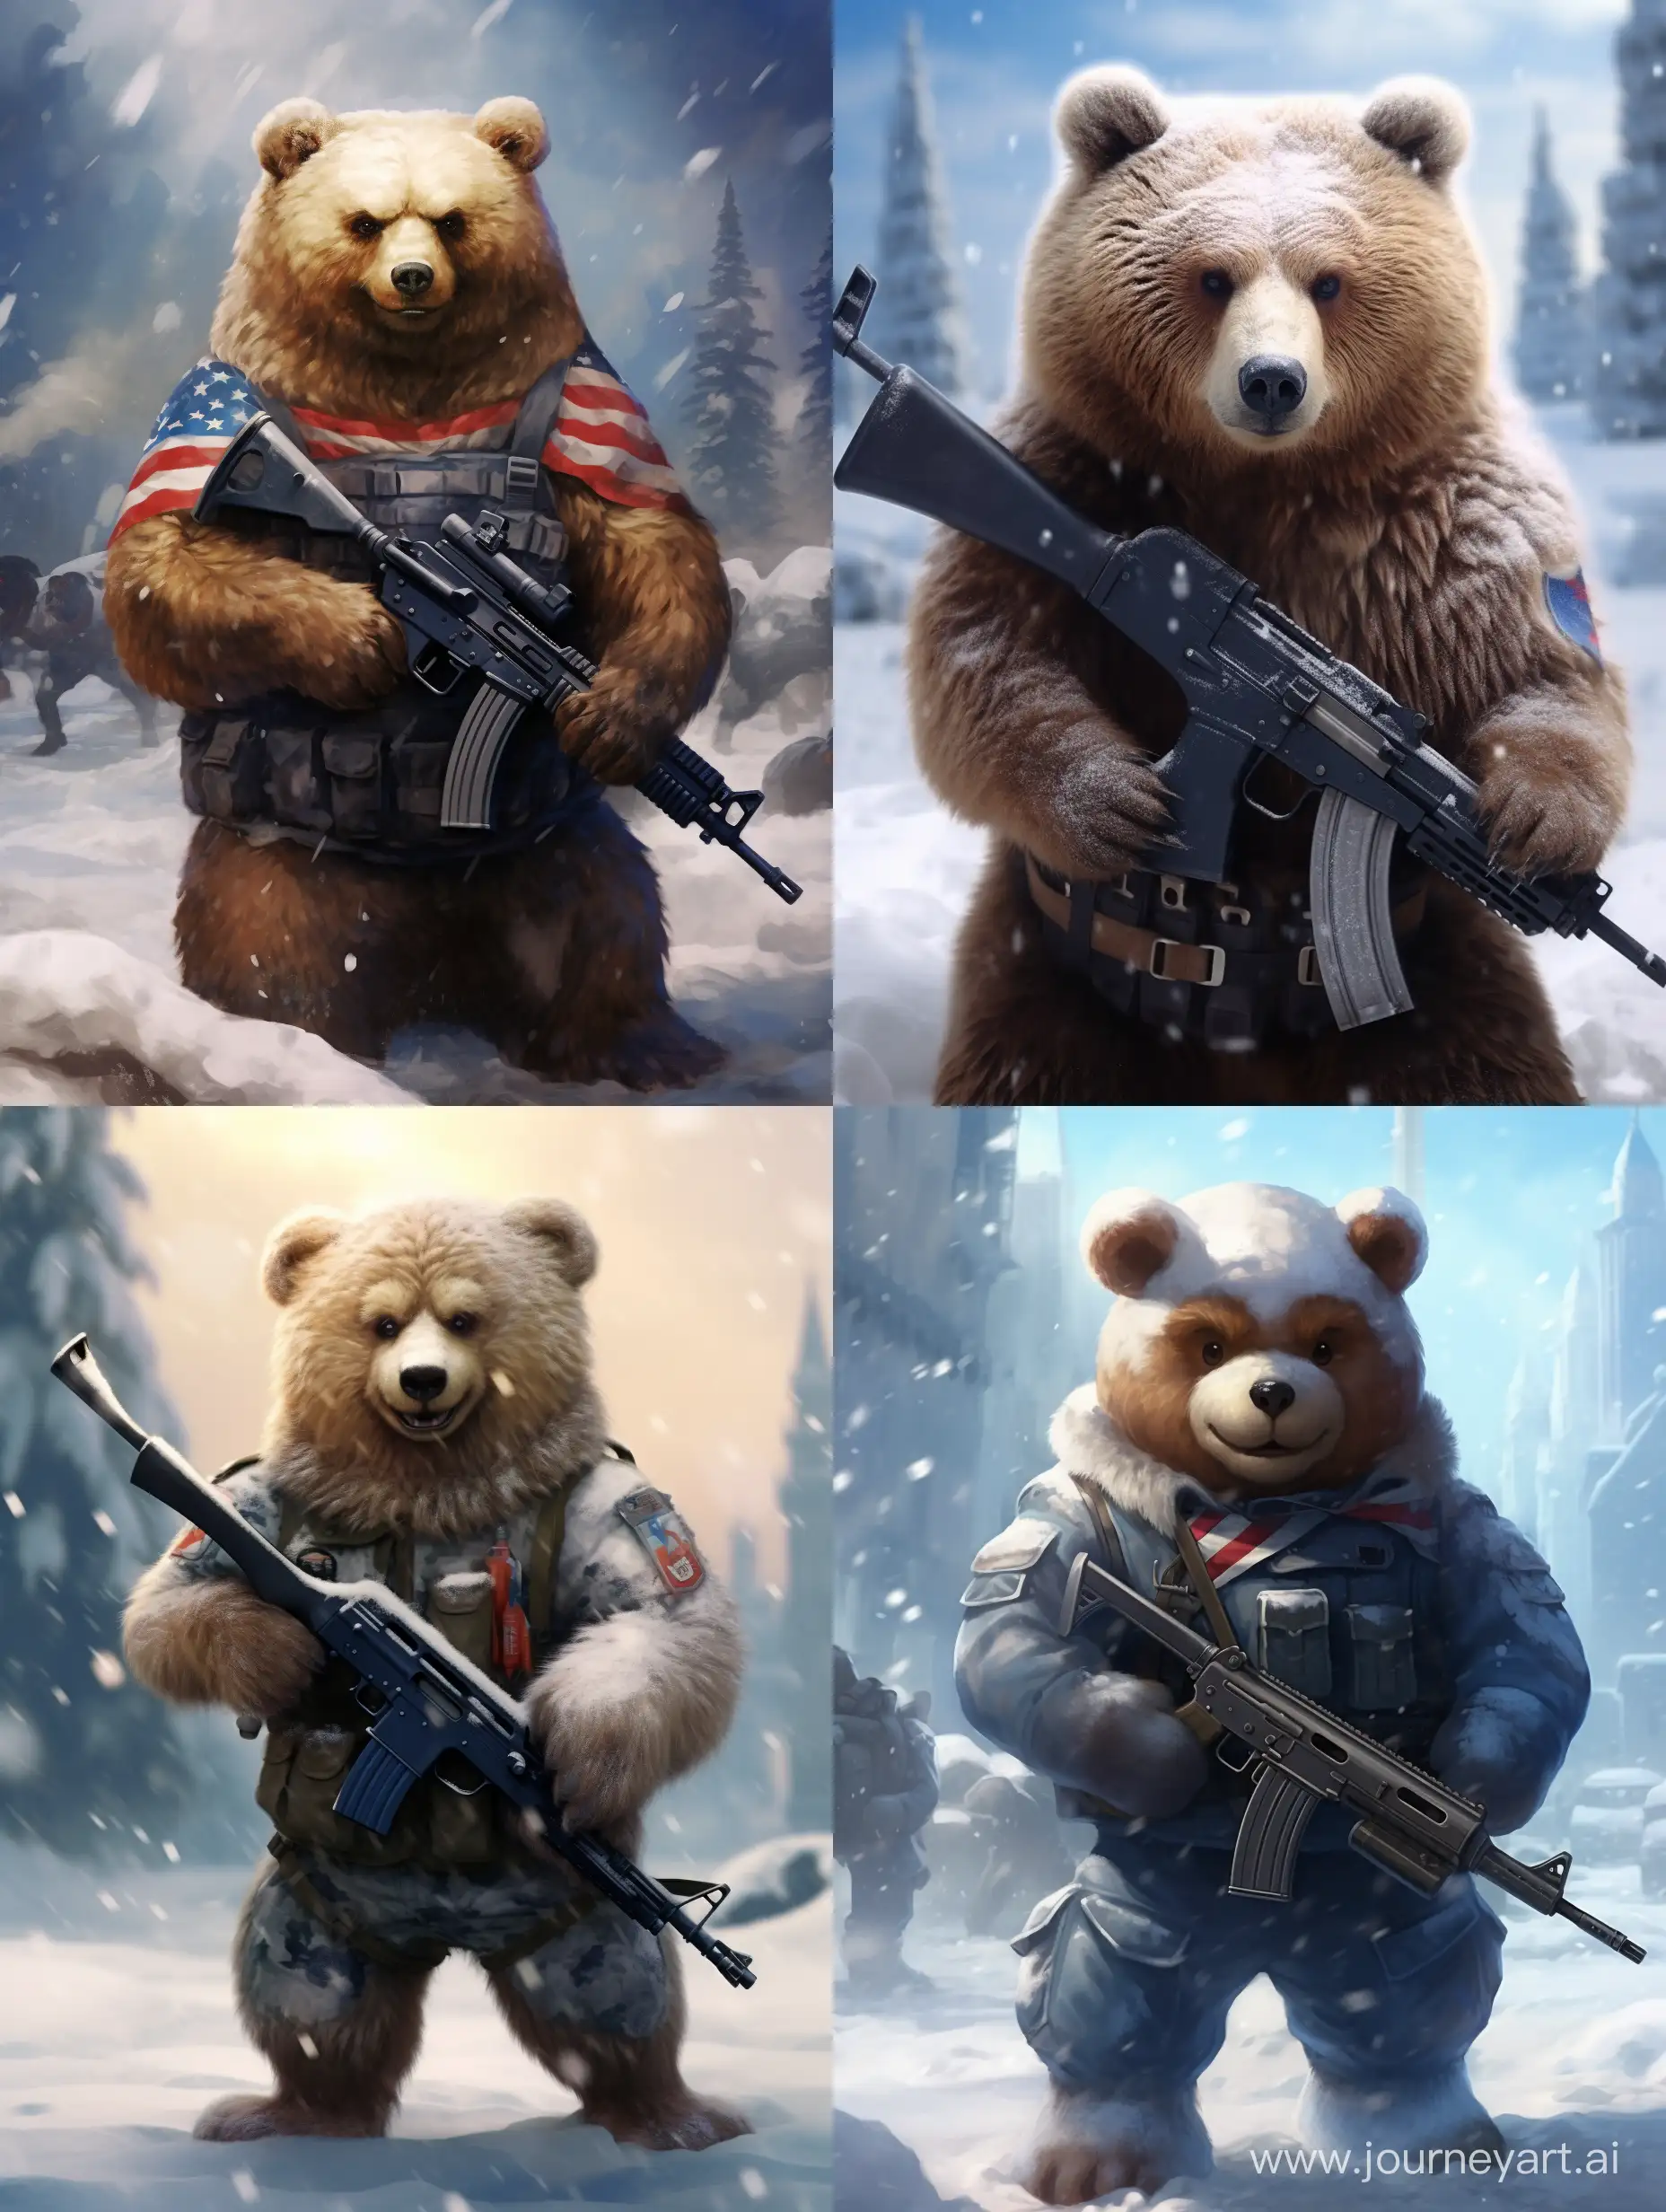 Joyful-Bear-with-a-Patriotic-Twist-Russian-Furry-Art-in-Snowy-Moscow